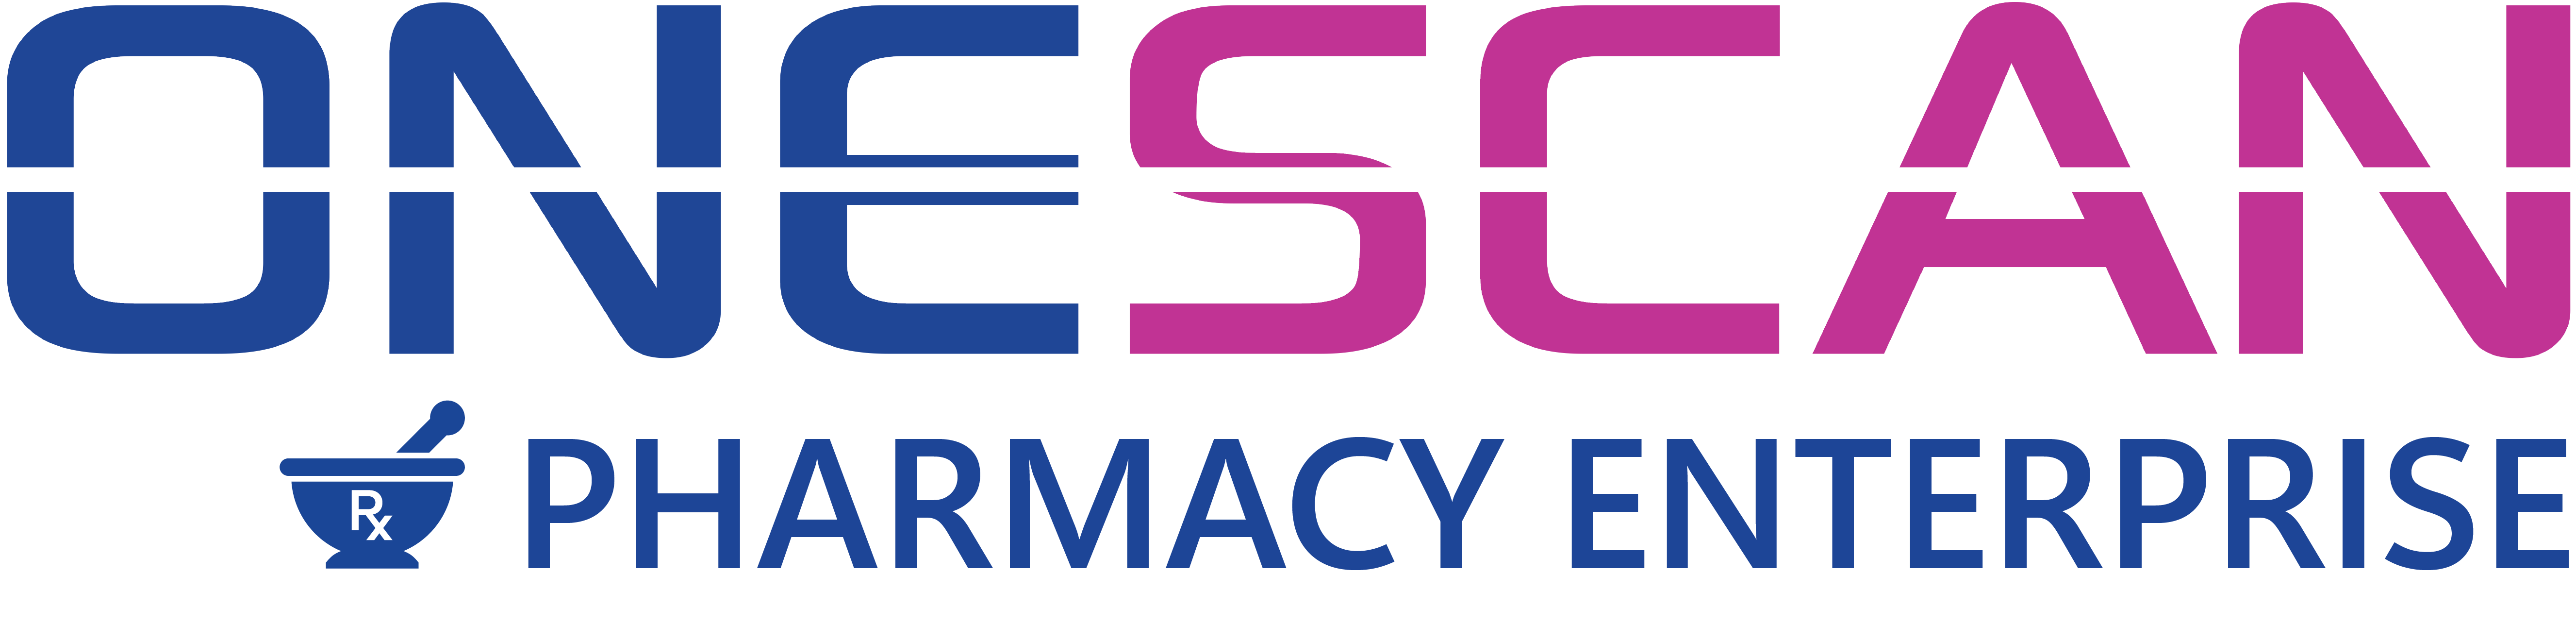 OneScan Pharmacy Enterprise